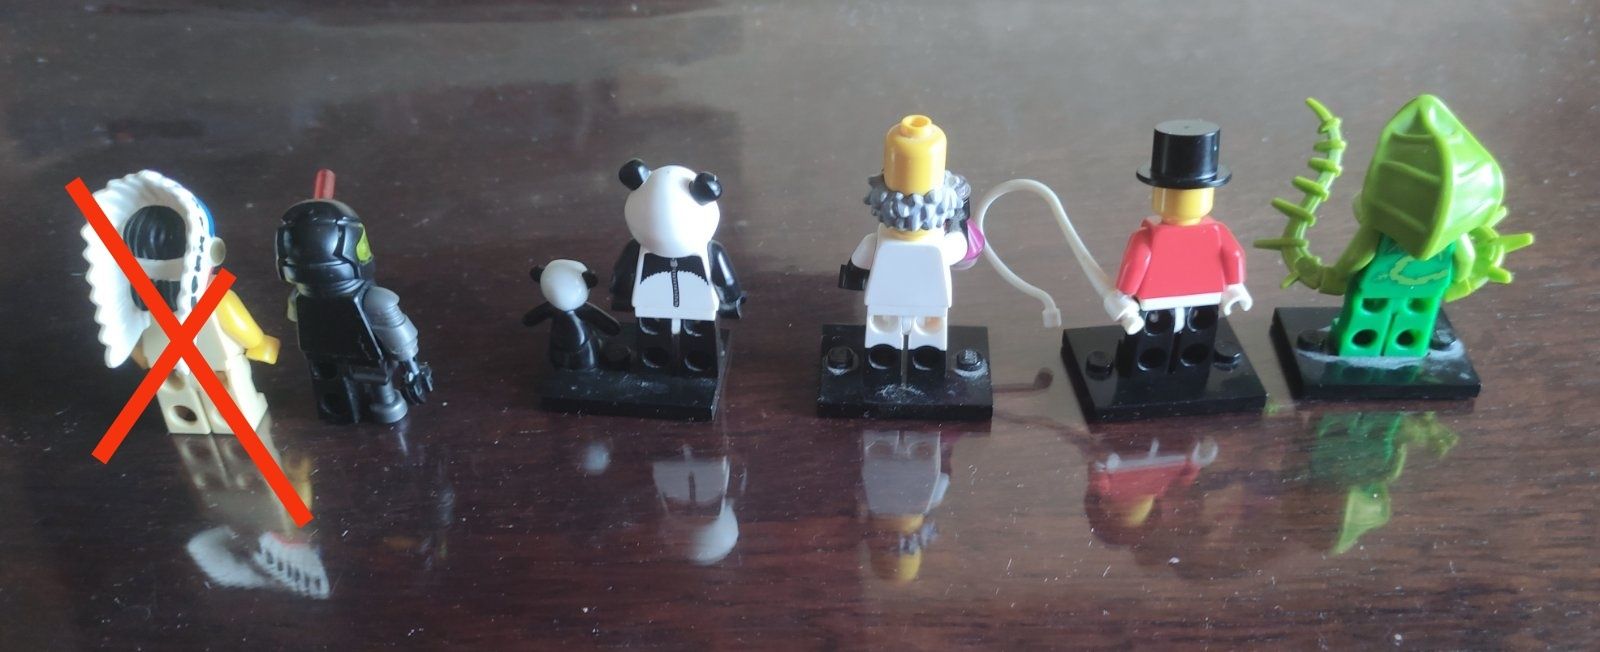 LEGO Minifigure Лего минифигурки.